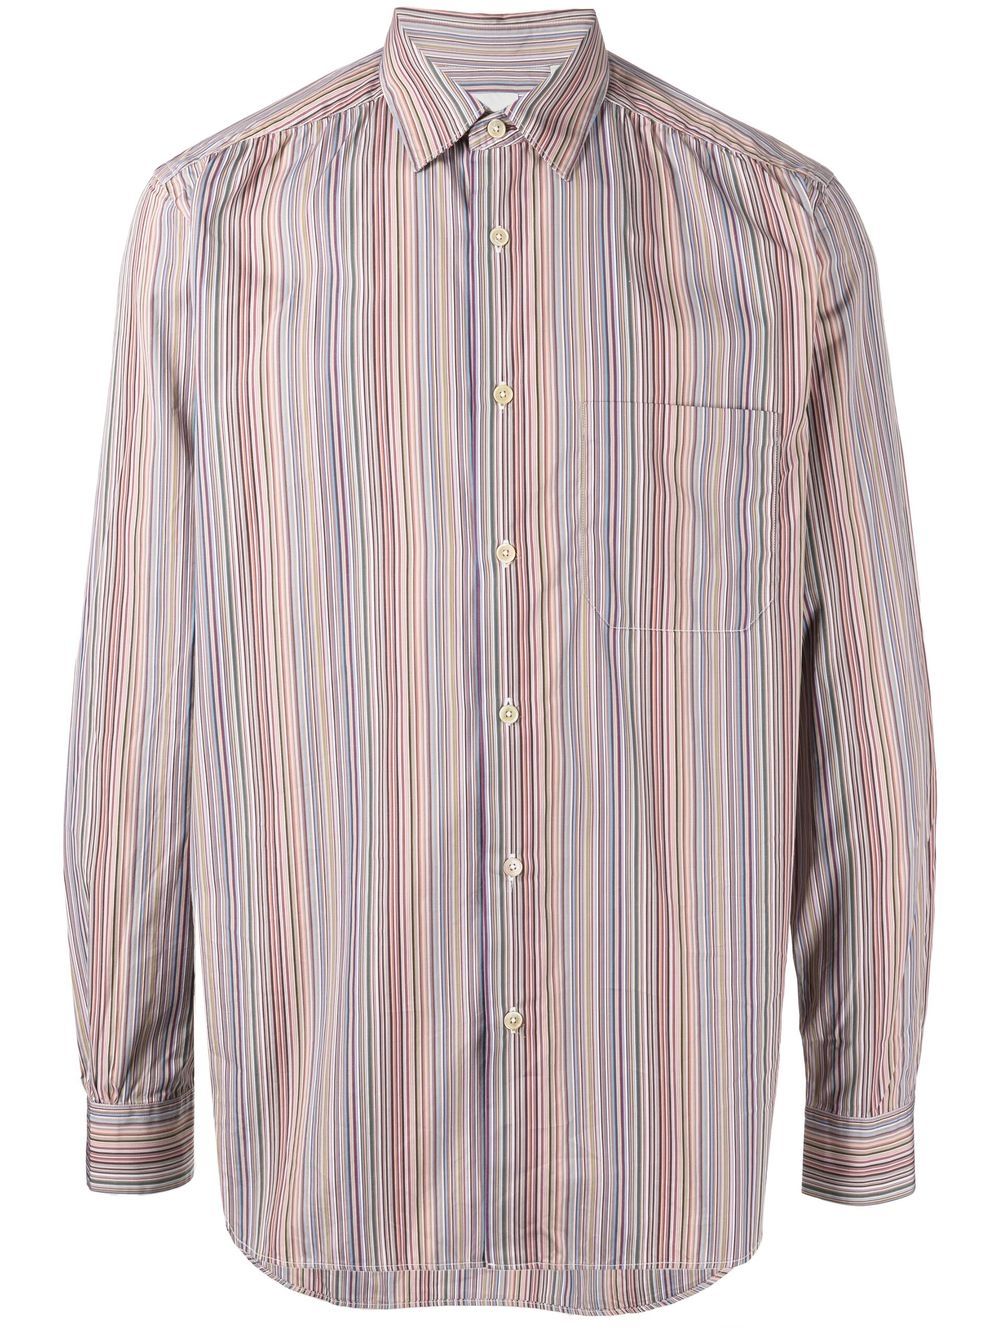 Paul Smith Signature Stripe Cotton Shirt - Farfetch